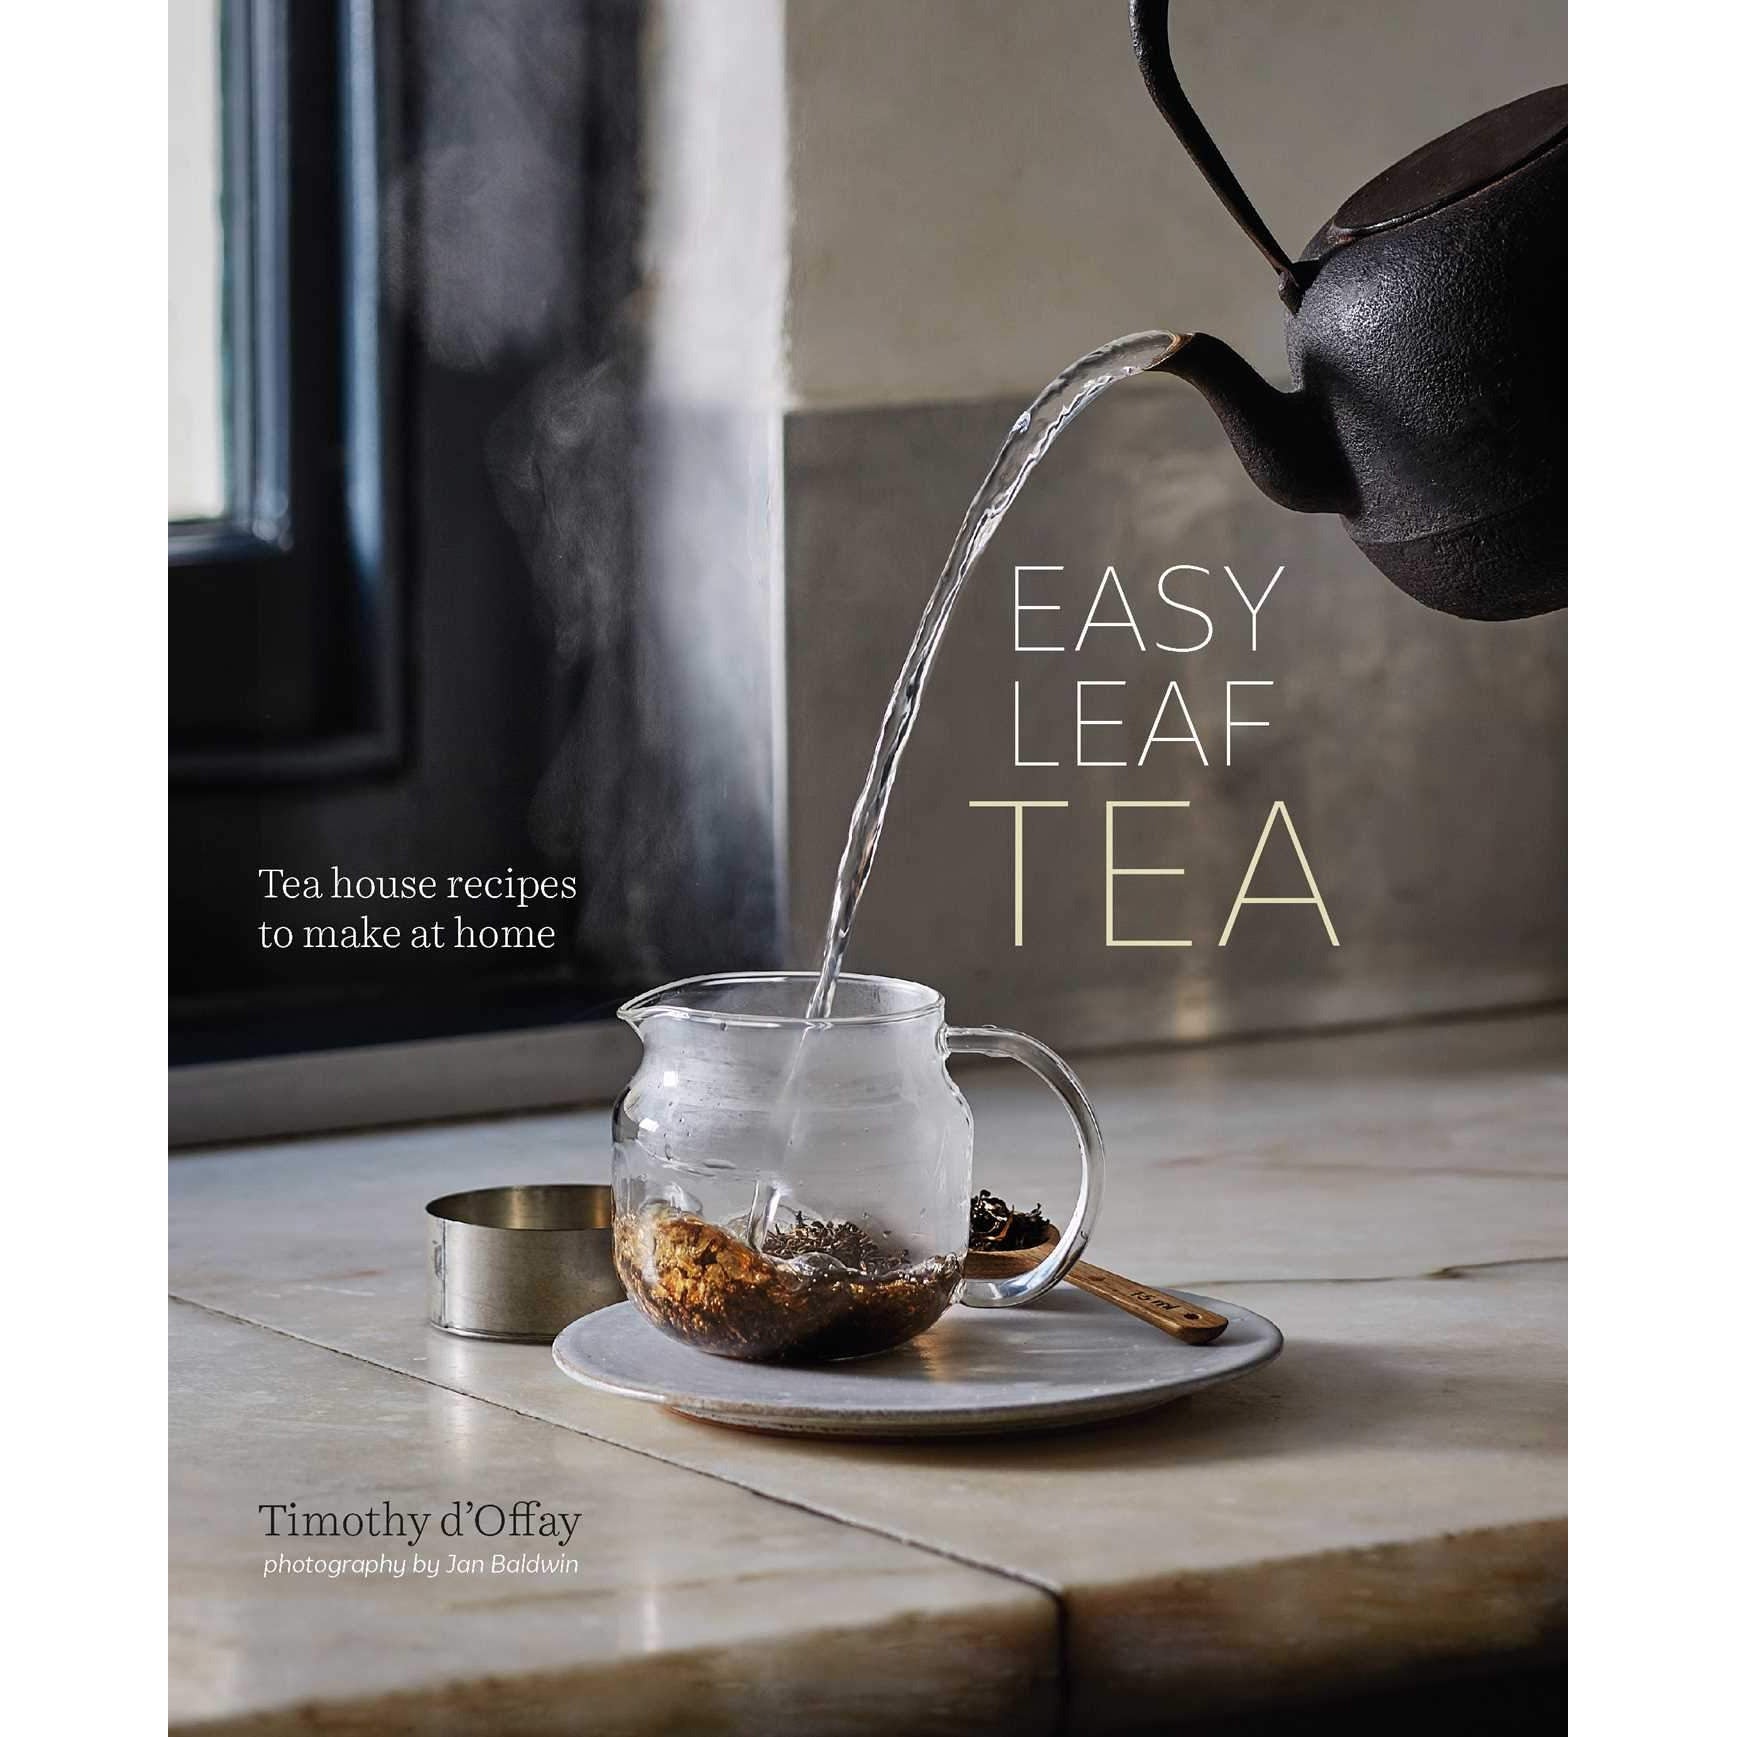 Té de hojas fácil: recetas de casa de té para preparar en casa